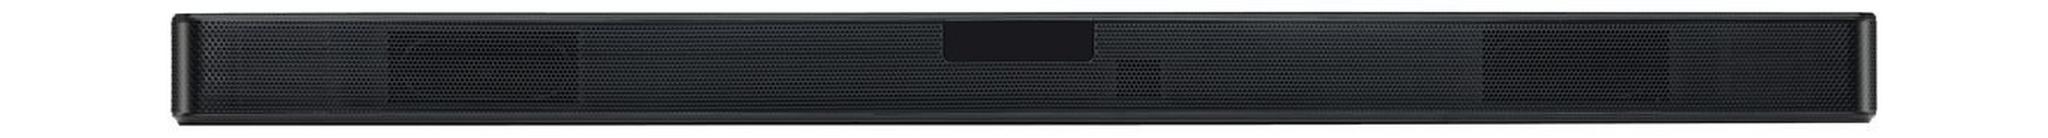 LG SL4 300W Bluetooth Soundbar + Wireless Woofer